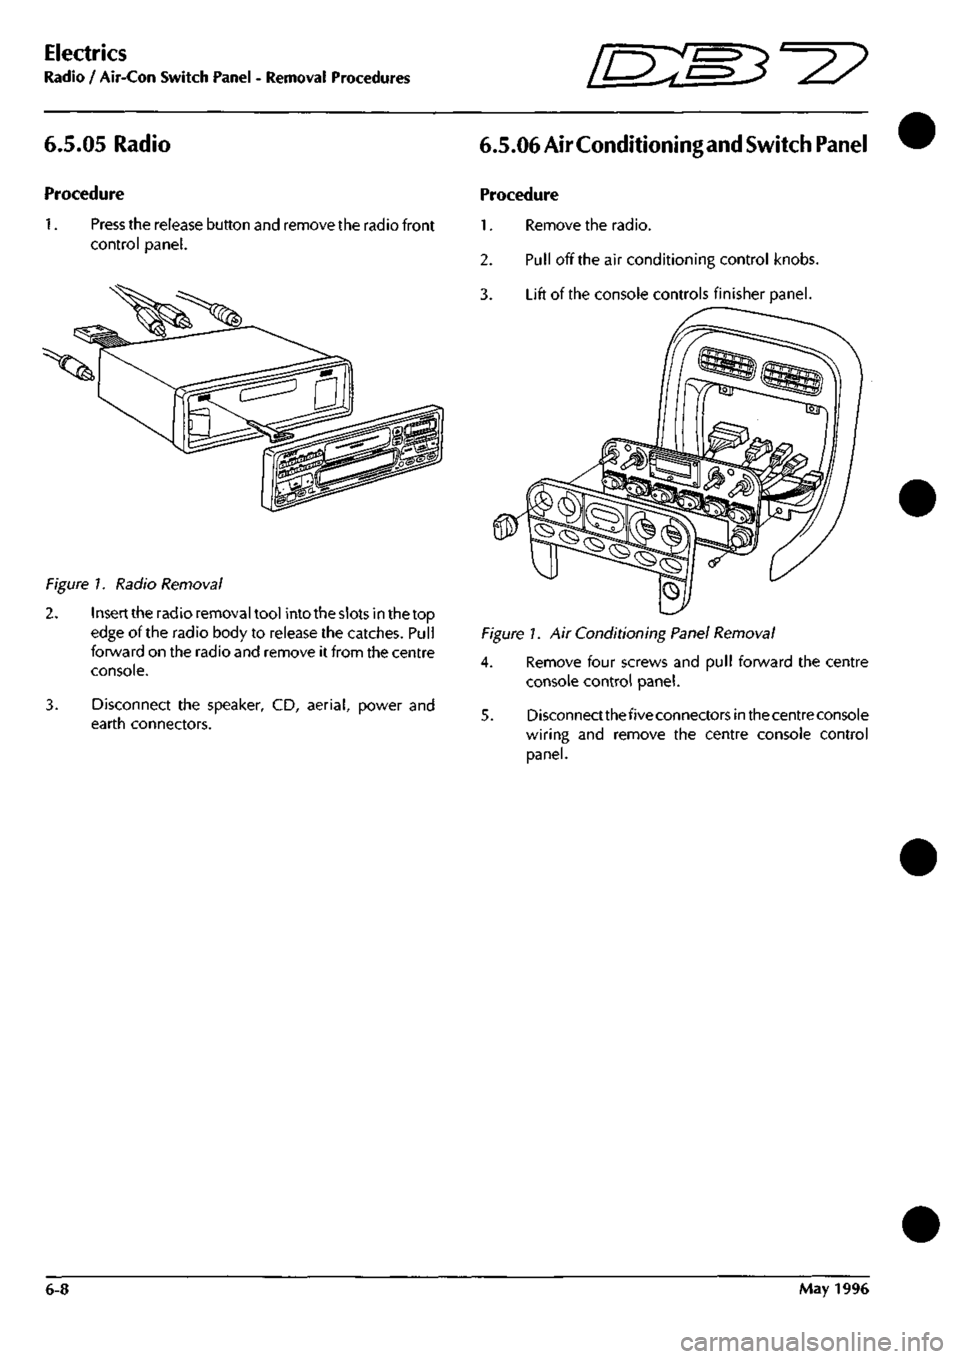 ASTON MARTIN DB7 1997 User Guide 
Electrics 
Radio / Air-Con Switch Panel - Removal Procedures [D:m3^^2? 
6.5.05 Radio 
Procedure 

1.
 Press the release button and remove the radio front 
control panel. 

Figure
 /. Radio Removal 

